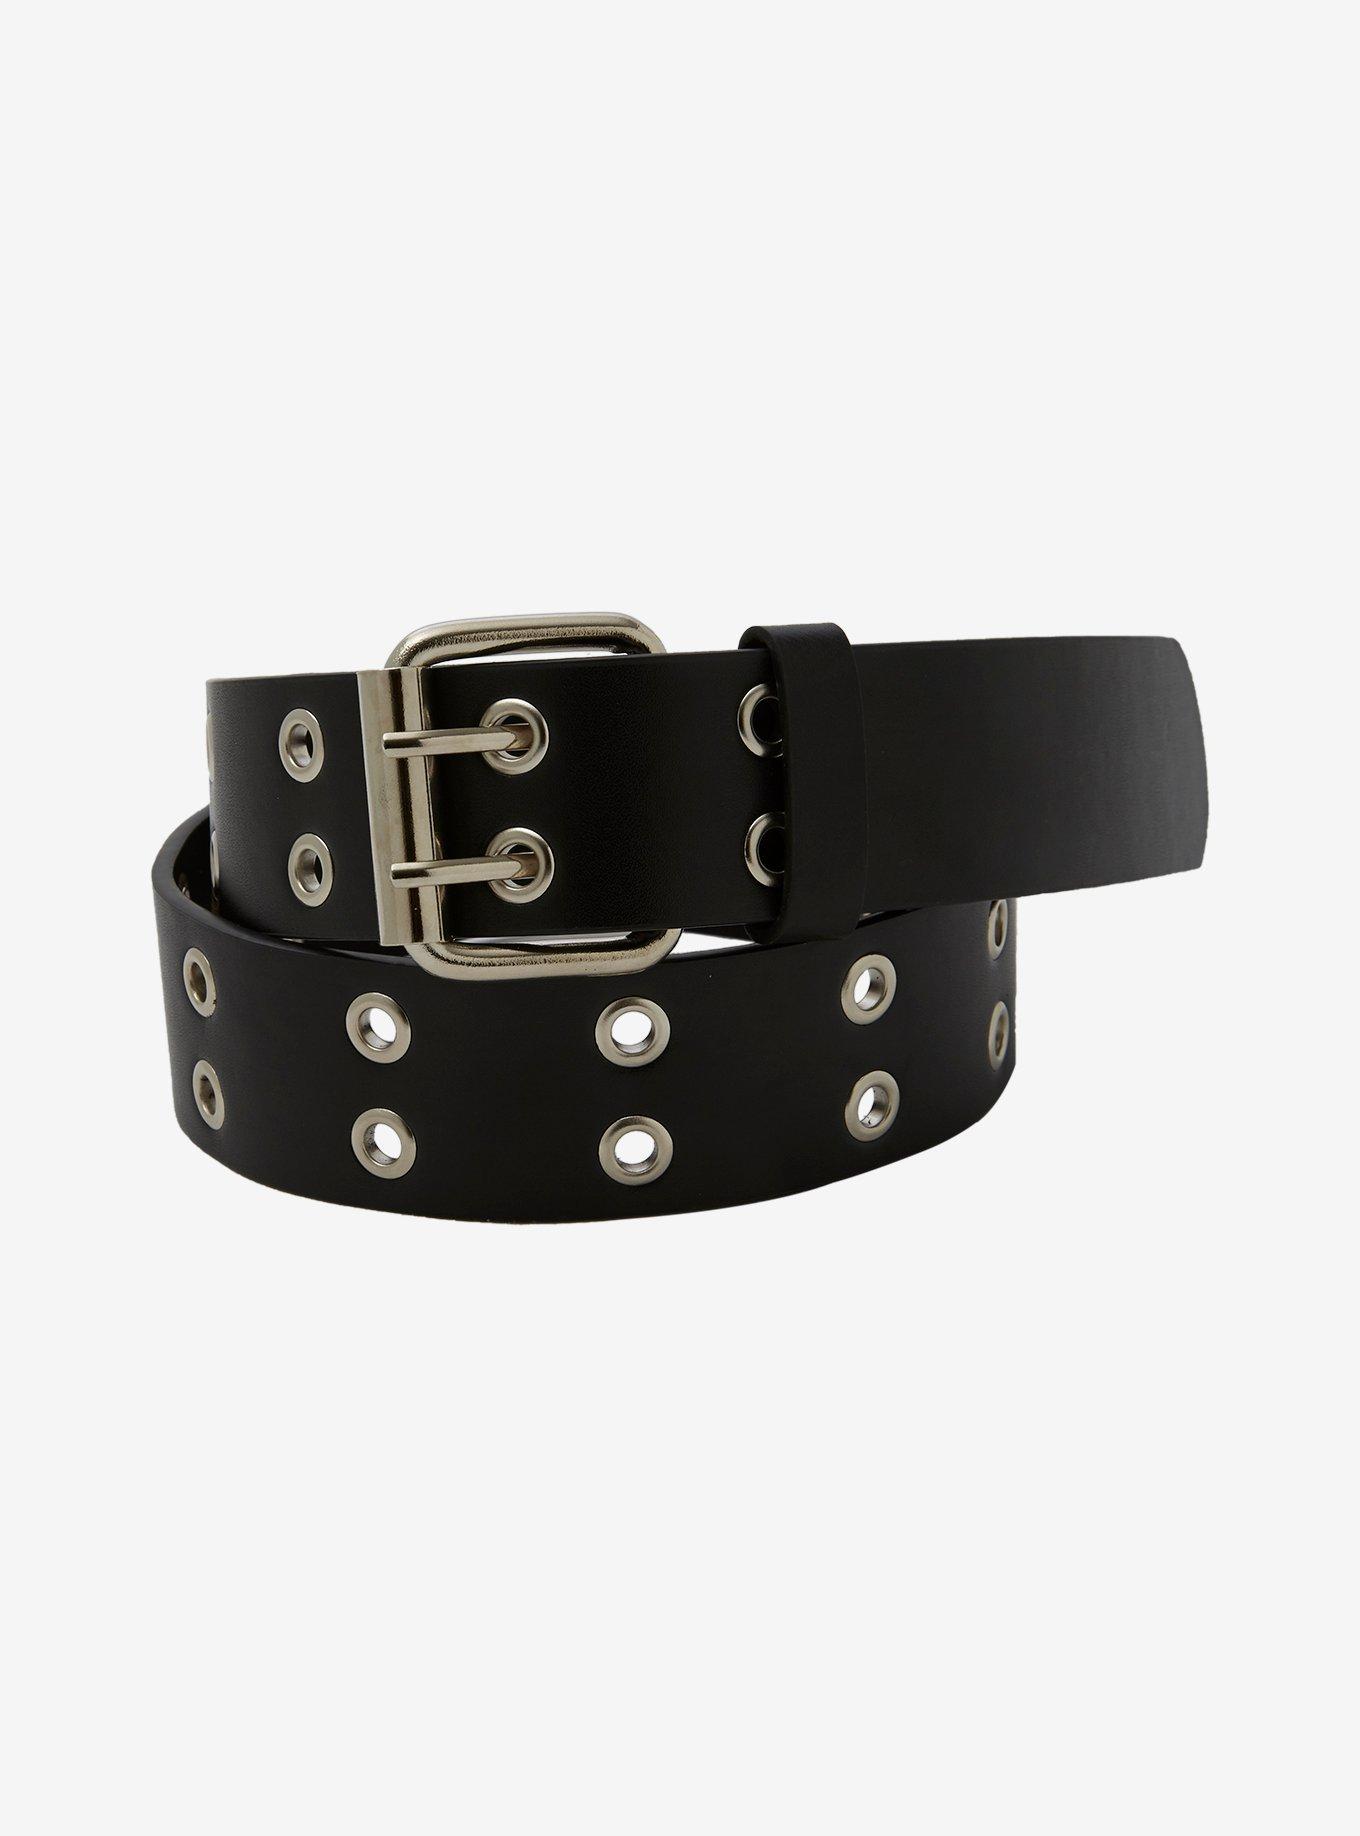 Unisex Jeans Belt Punk PU Leather Waist Buckle For Women Men Kpop Goth Chain  Belt Black